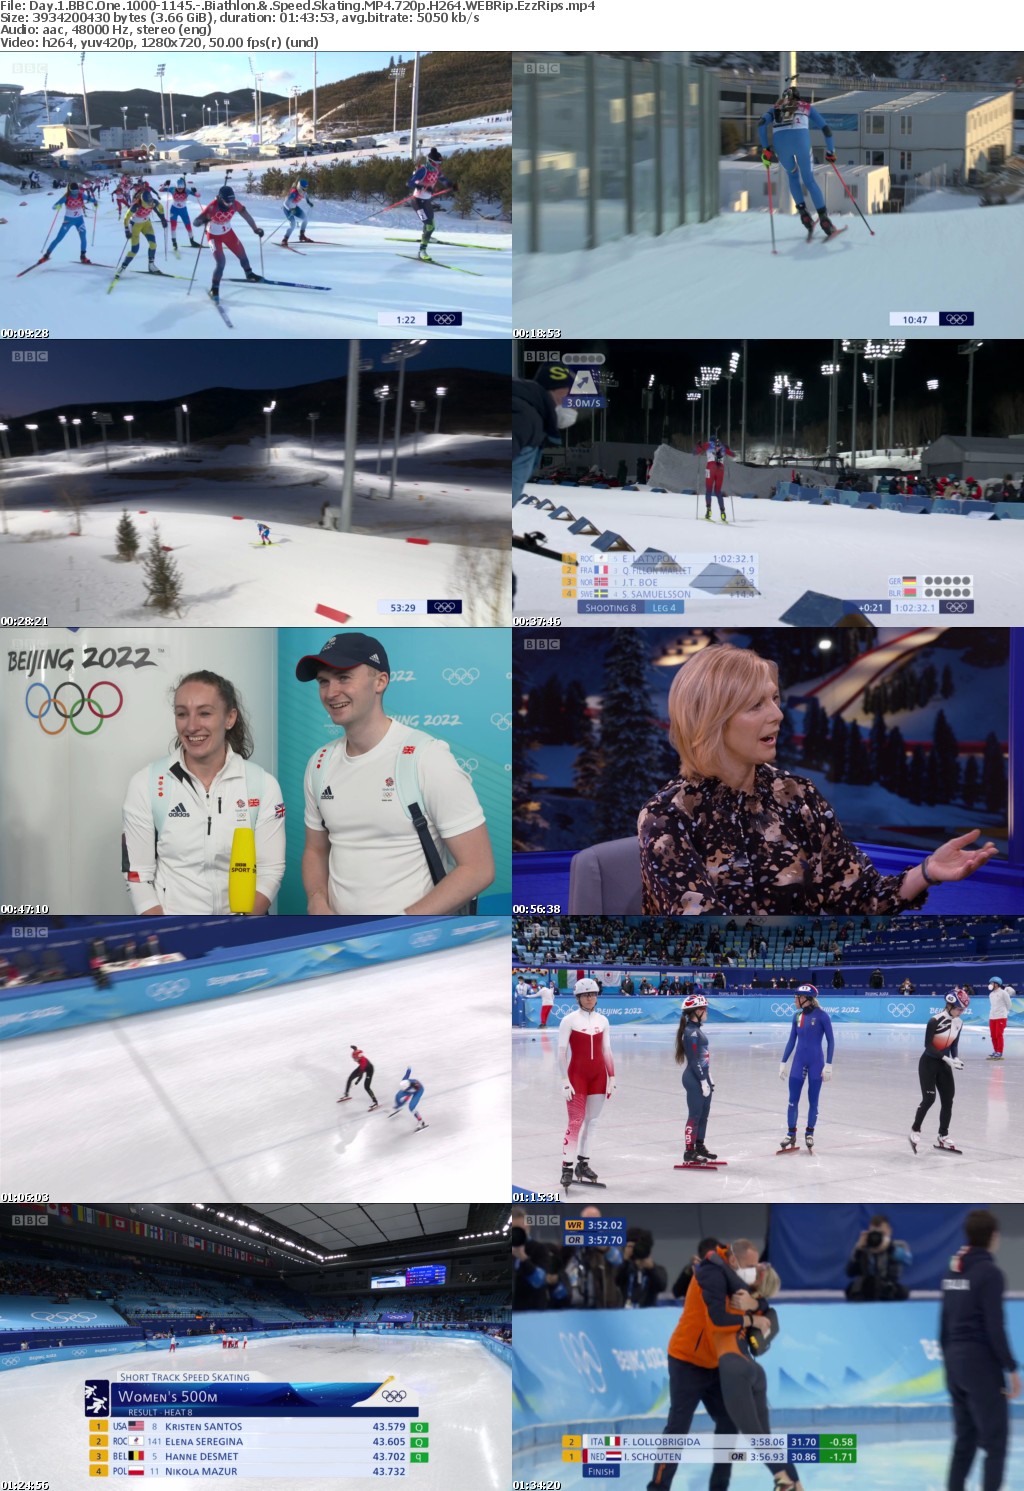 Beijing 2022 Olympics Day 1 BBC One 1000-1145 - Biathlon Speed Skating MP4 720p H264 WEBRip EzzRips